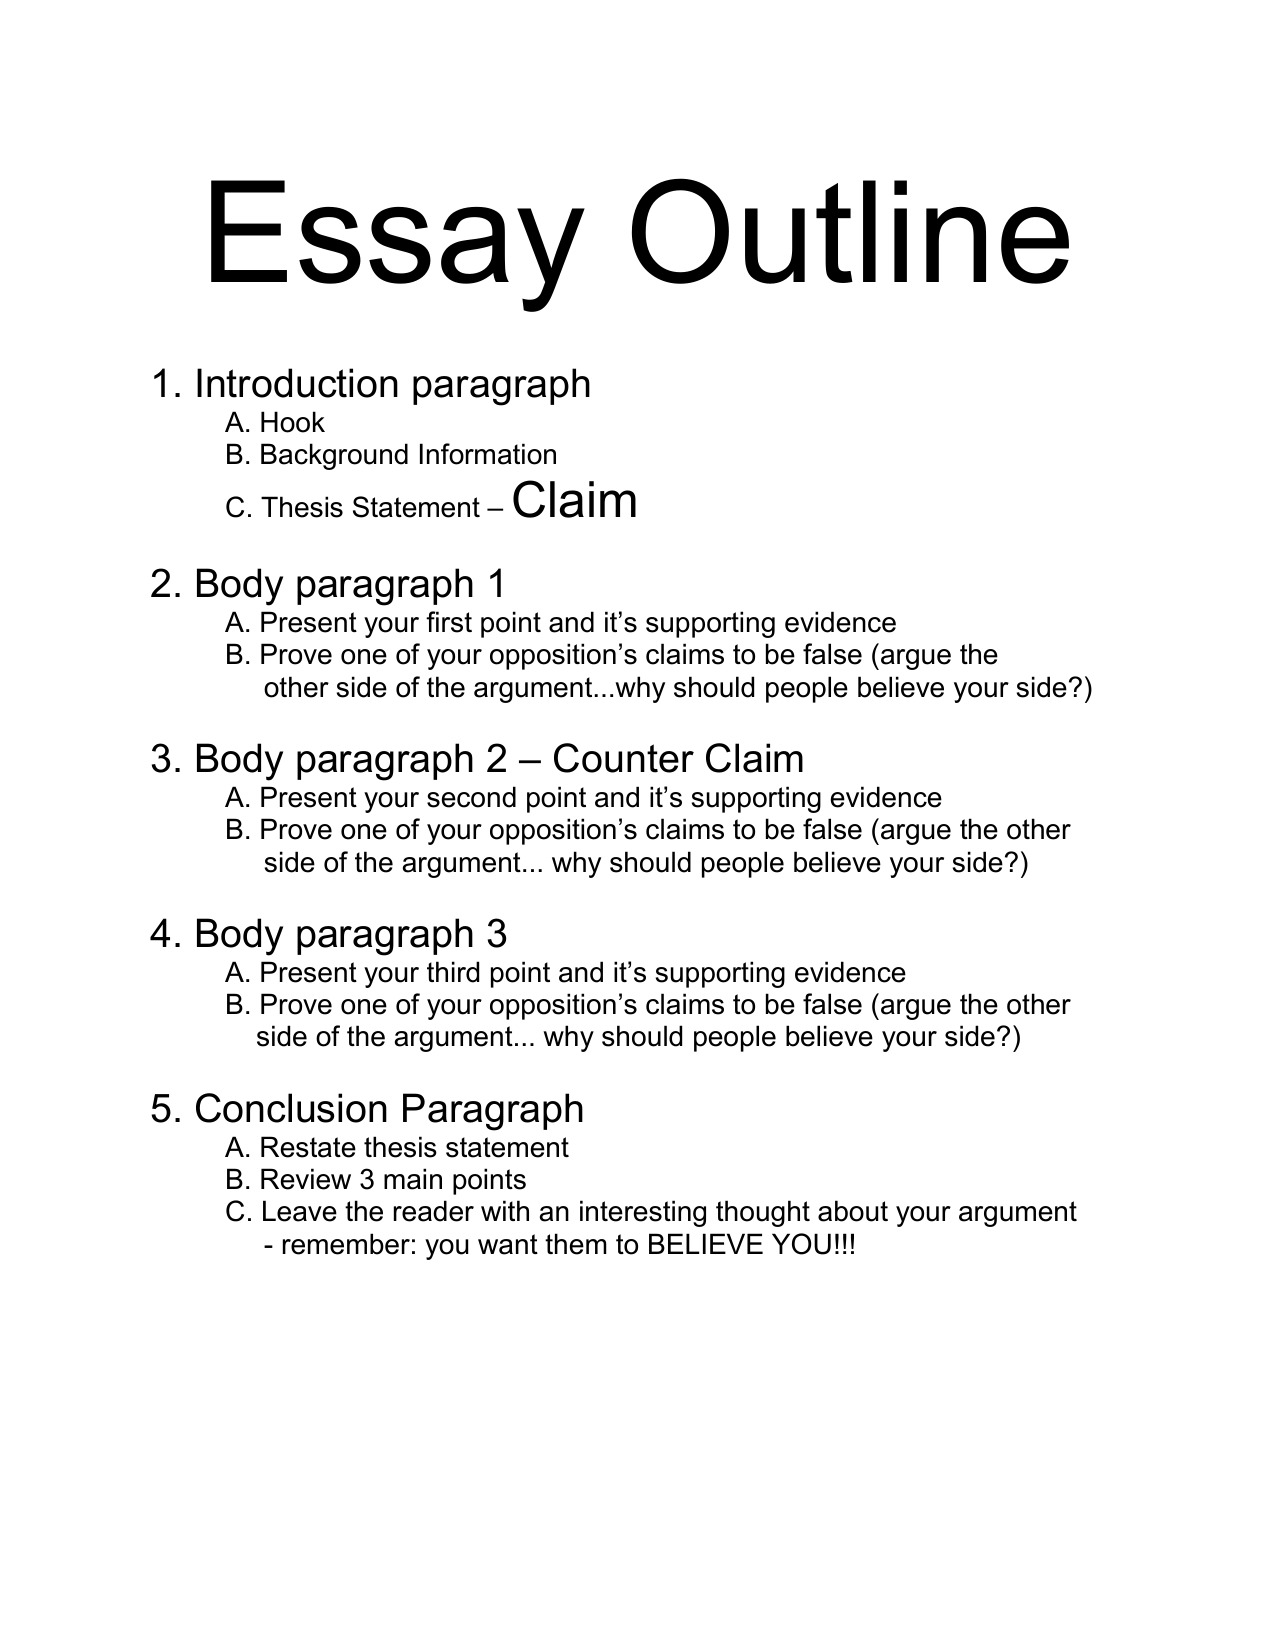 writing an essay outline pdf